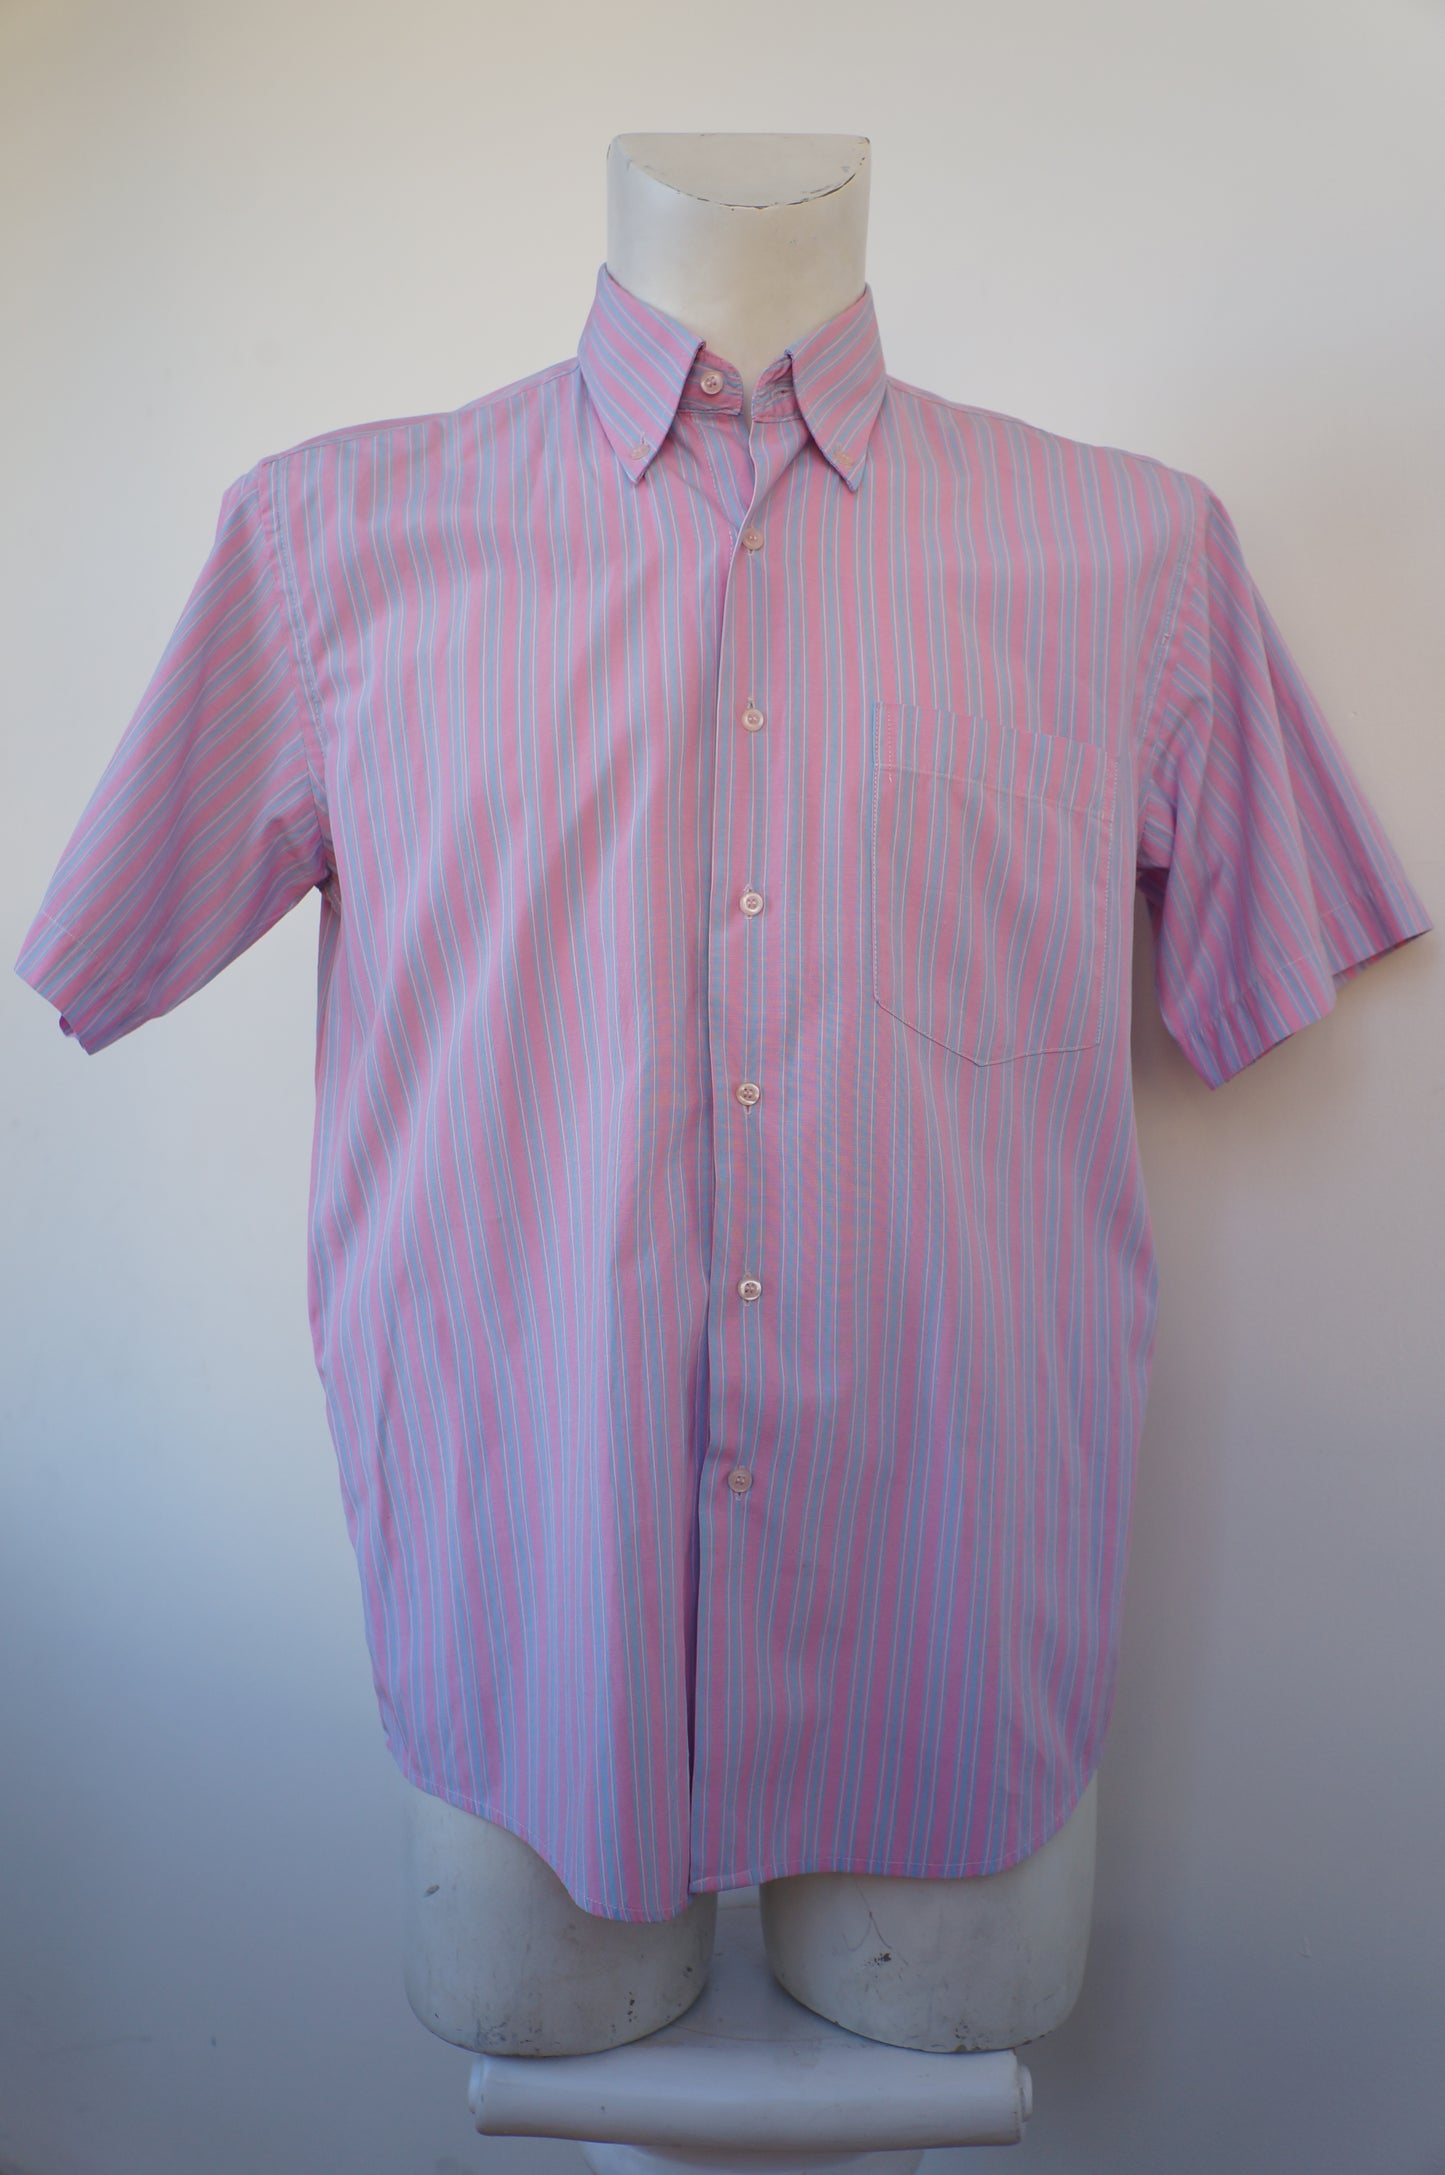 Attore pink shirt